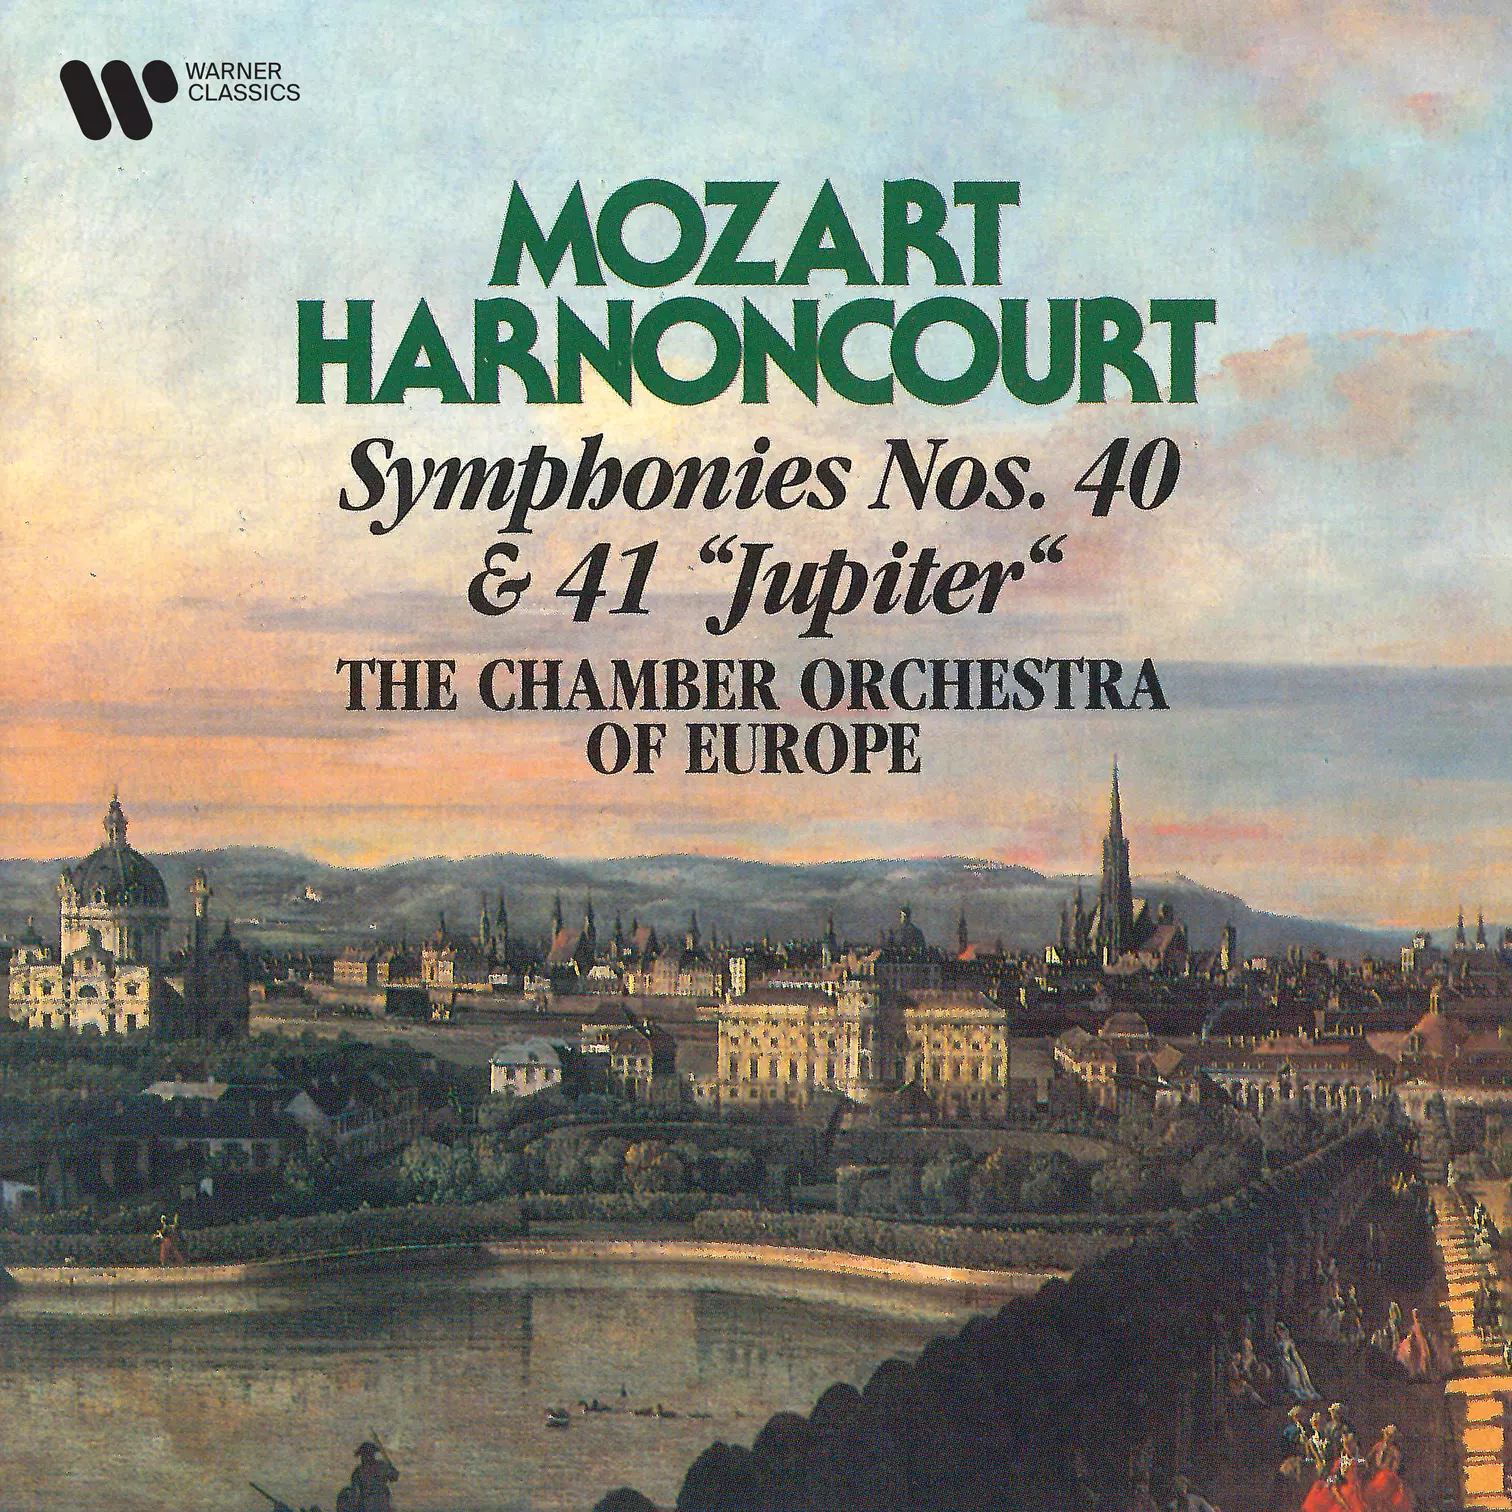 Mozart: Symphonies Nos. 40 & 41 “Jupiter”